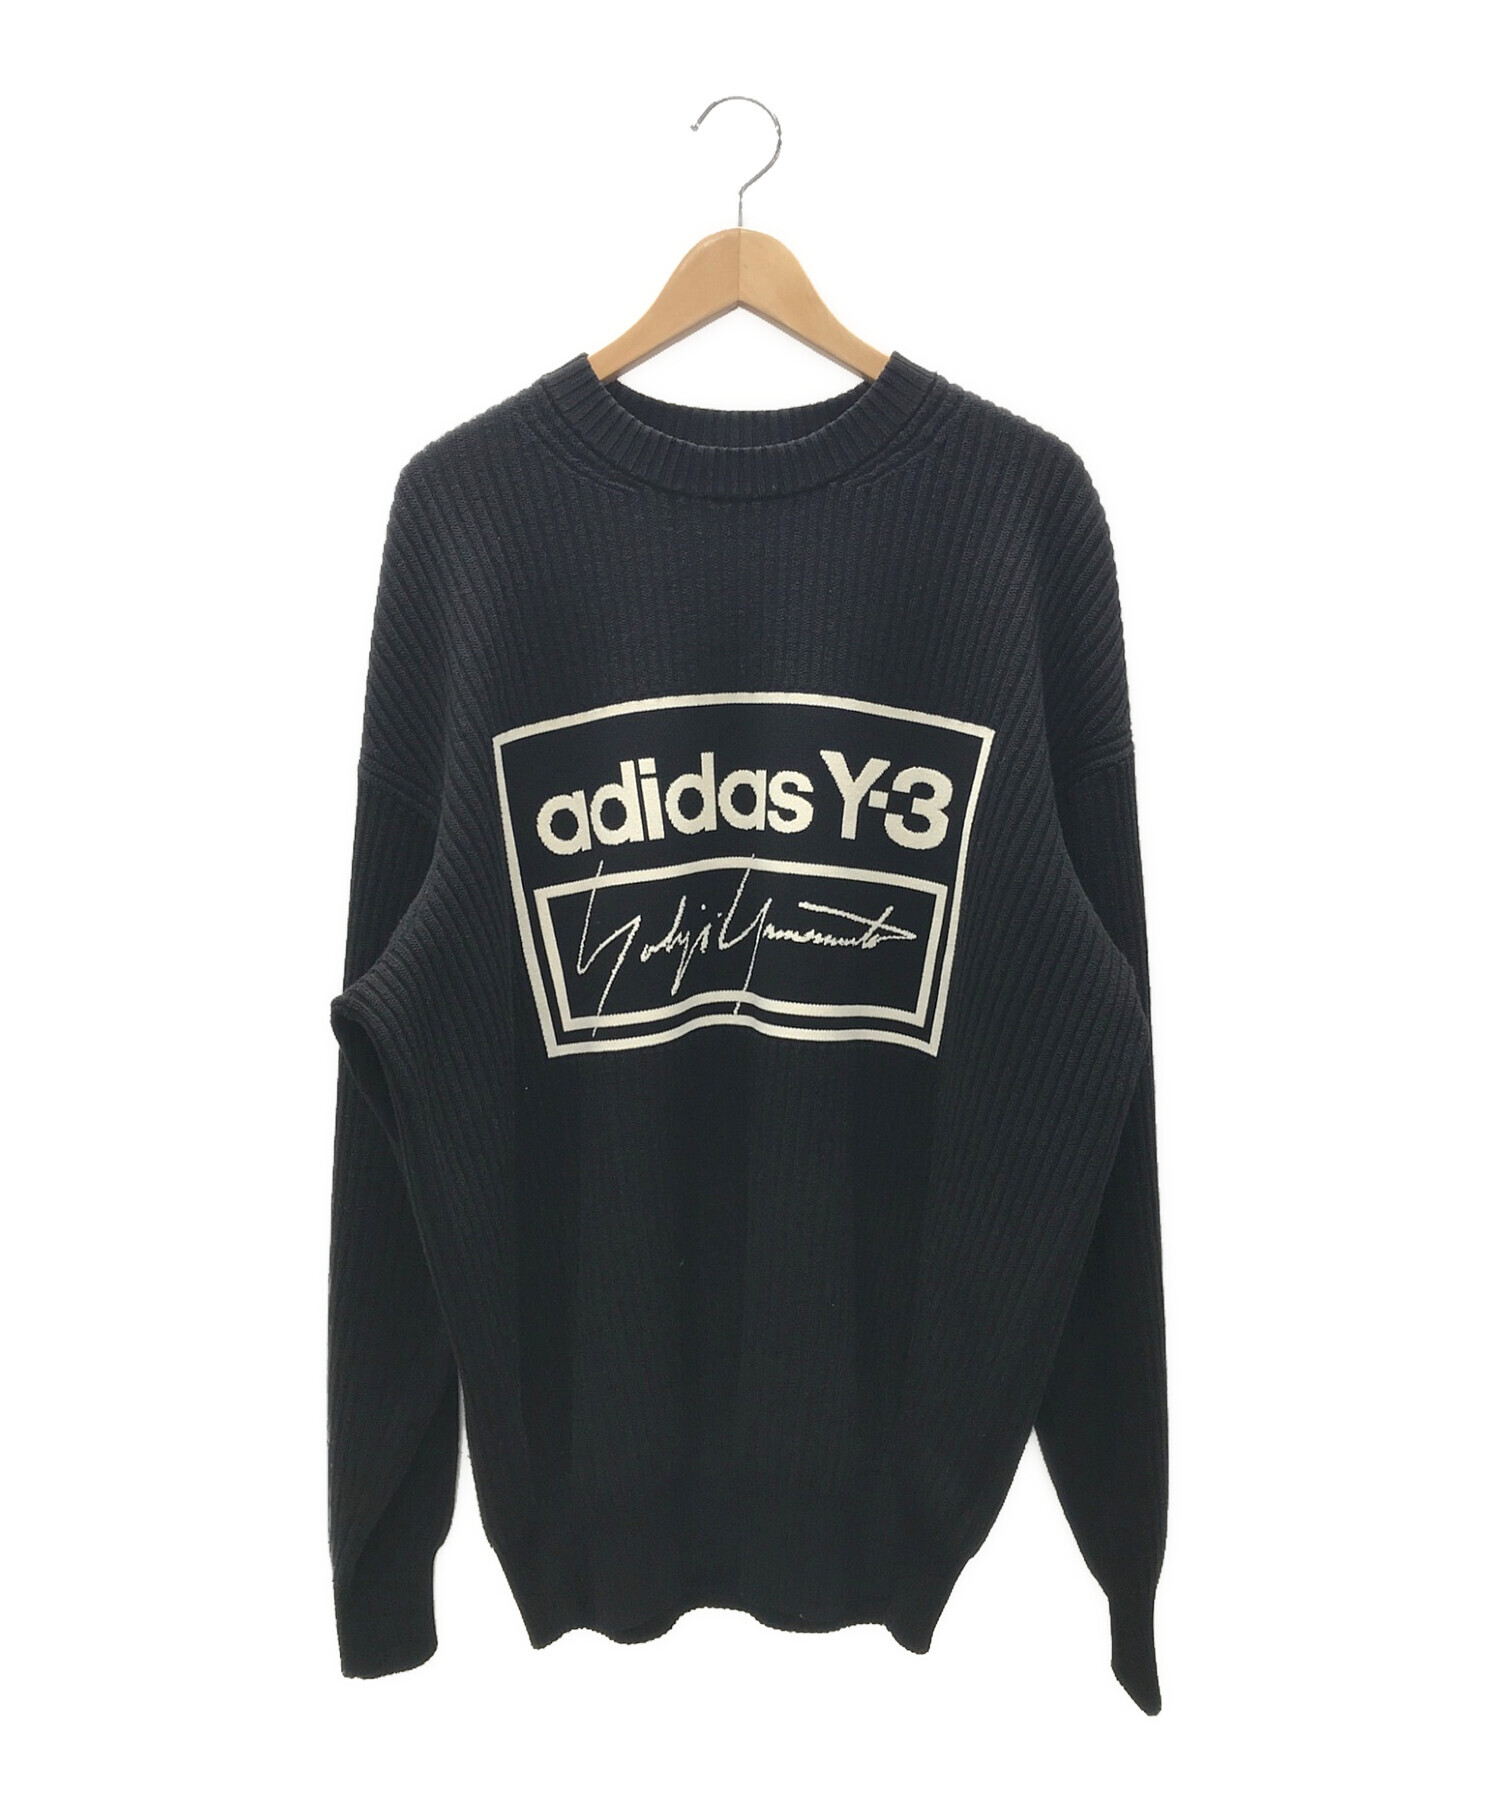 adidas×Y-3 (アディダス×ワイスリー) Tech knit Crew Sweater ブラック サイズ:XXS